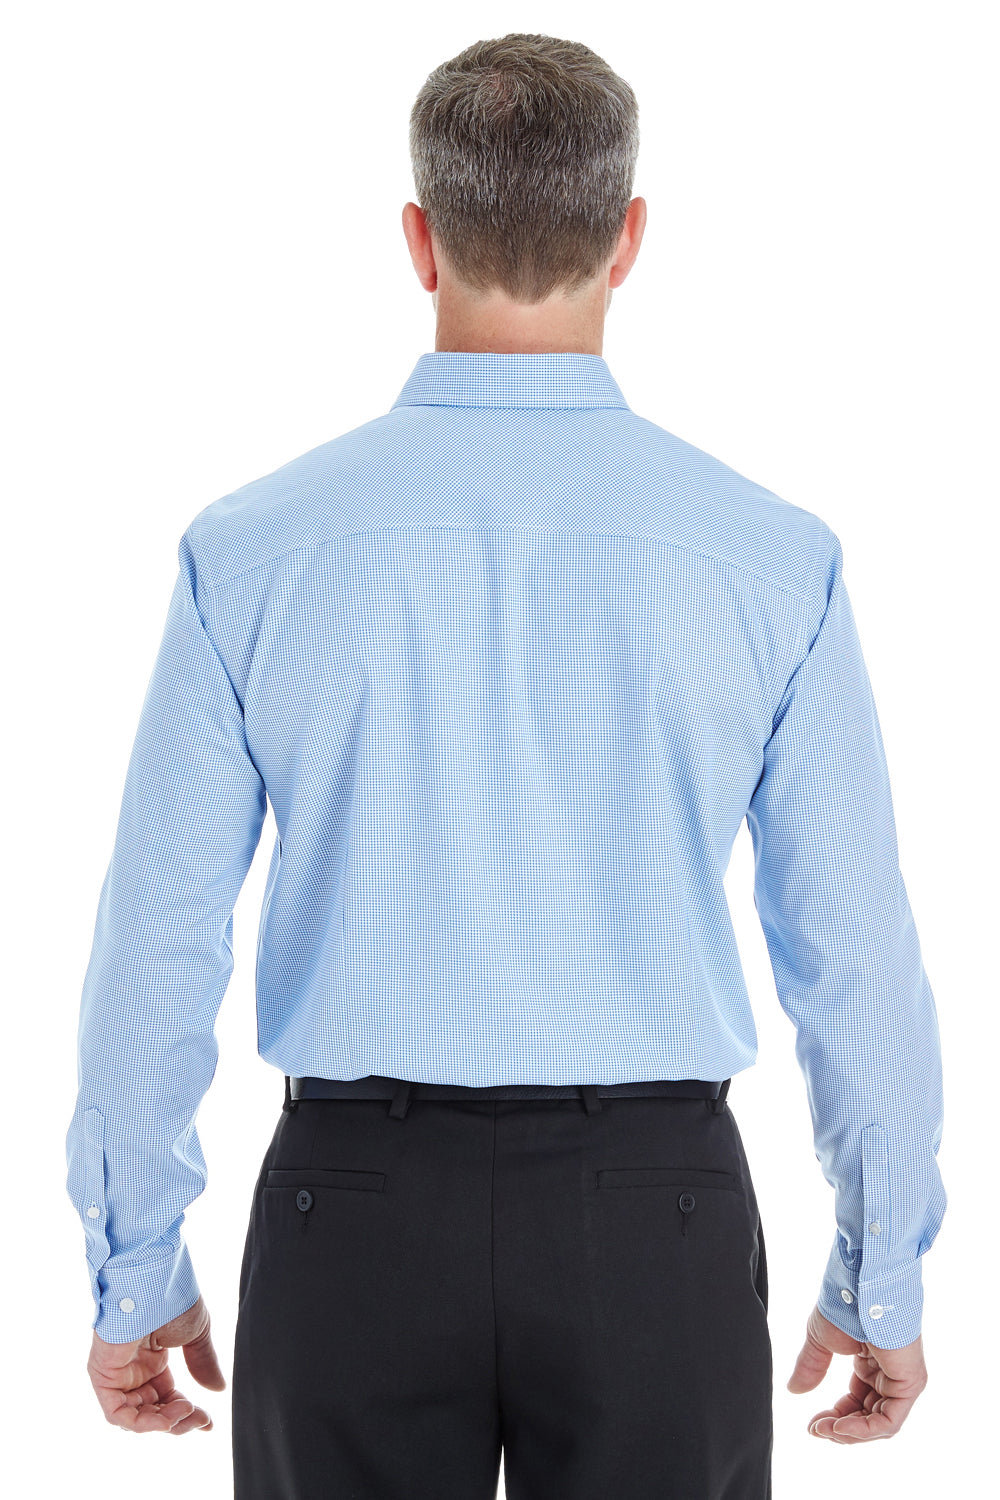 Devon & Jones DG532 Mens Crown Woven Collection Wrinkle Resistant Long Sleeve Button Down Shirt French Blue Back